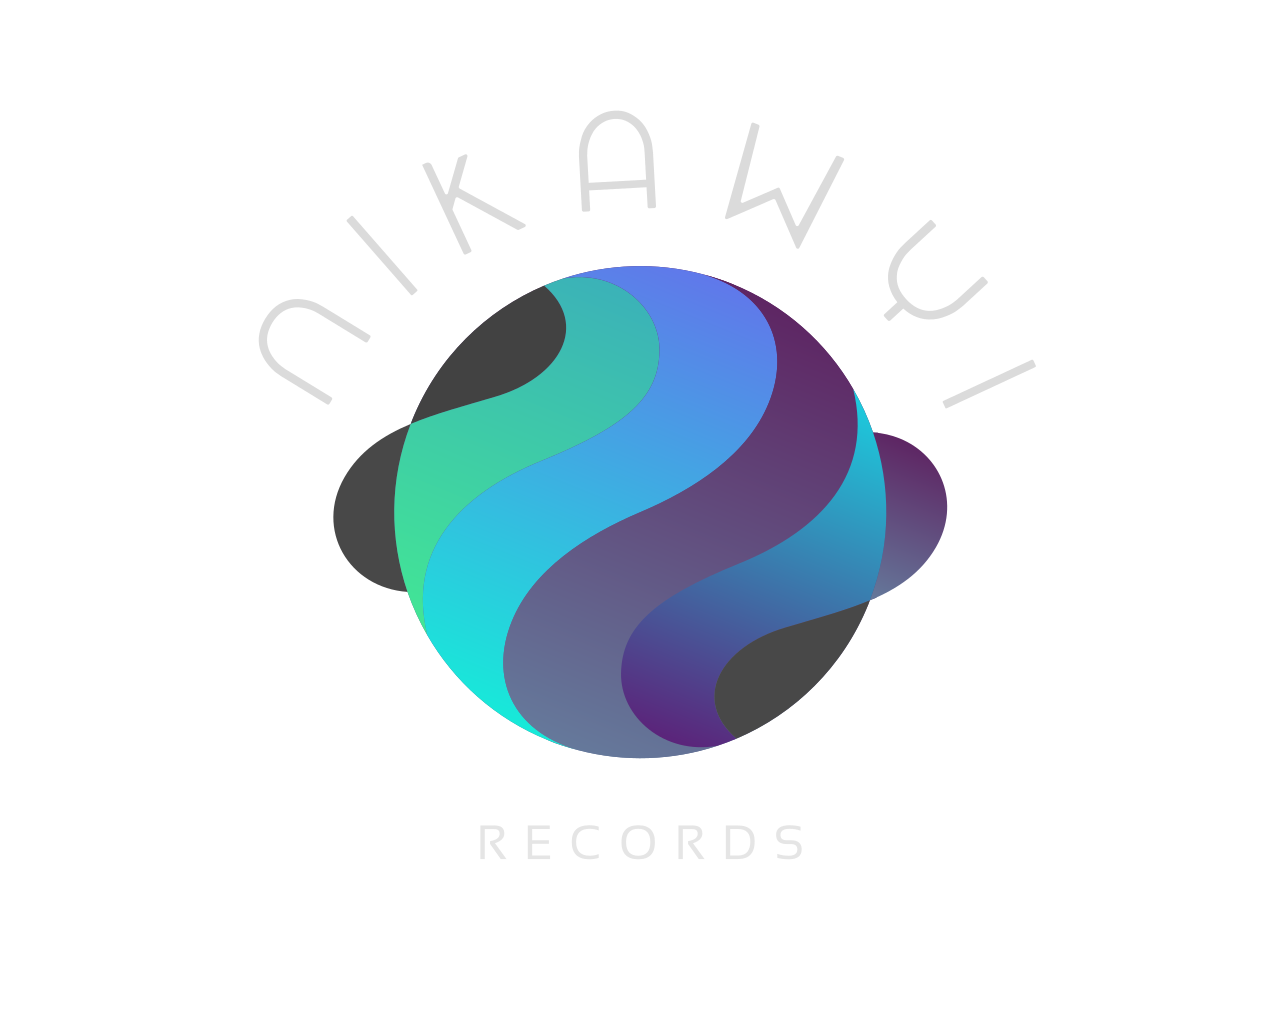 nikawyi records